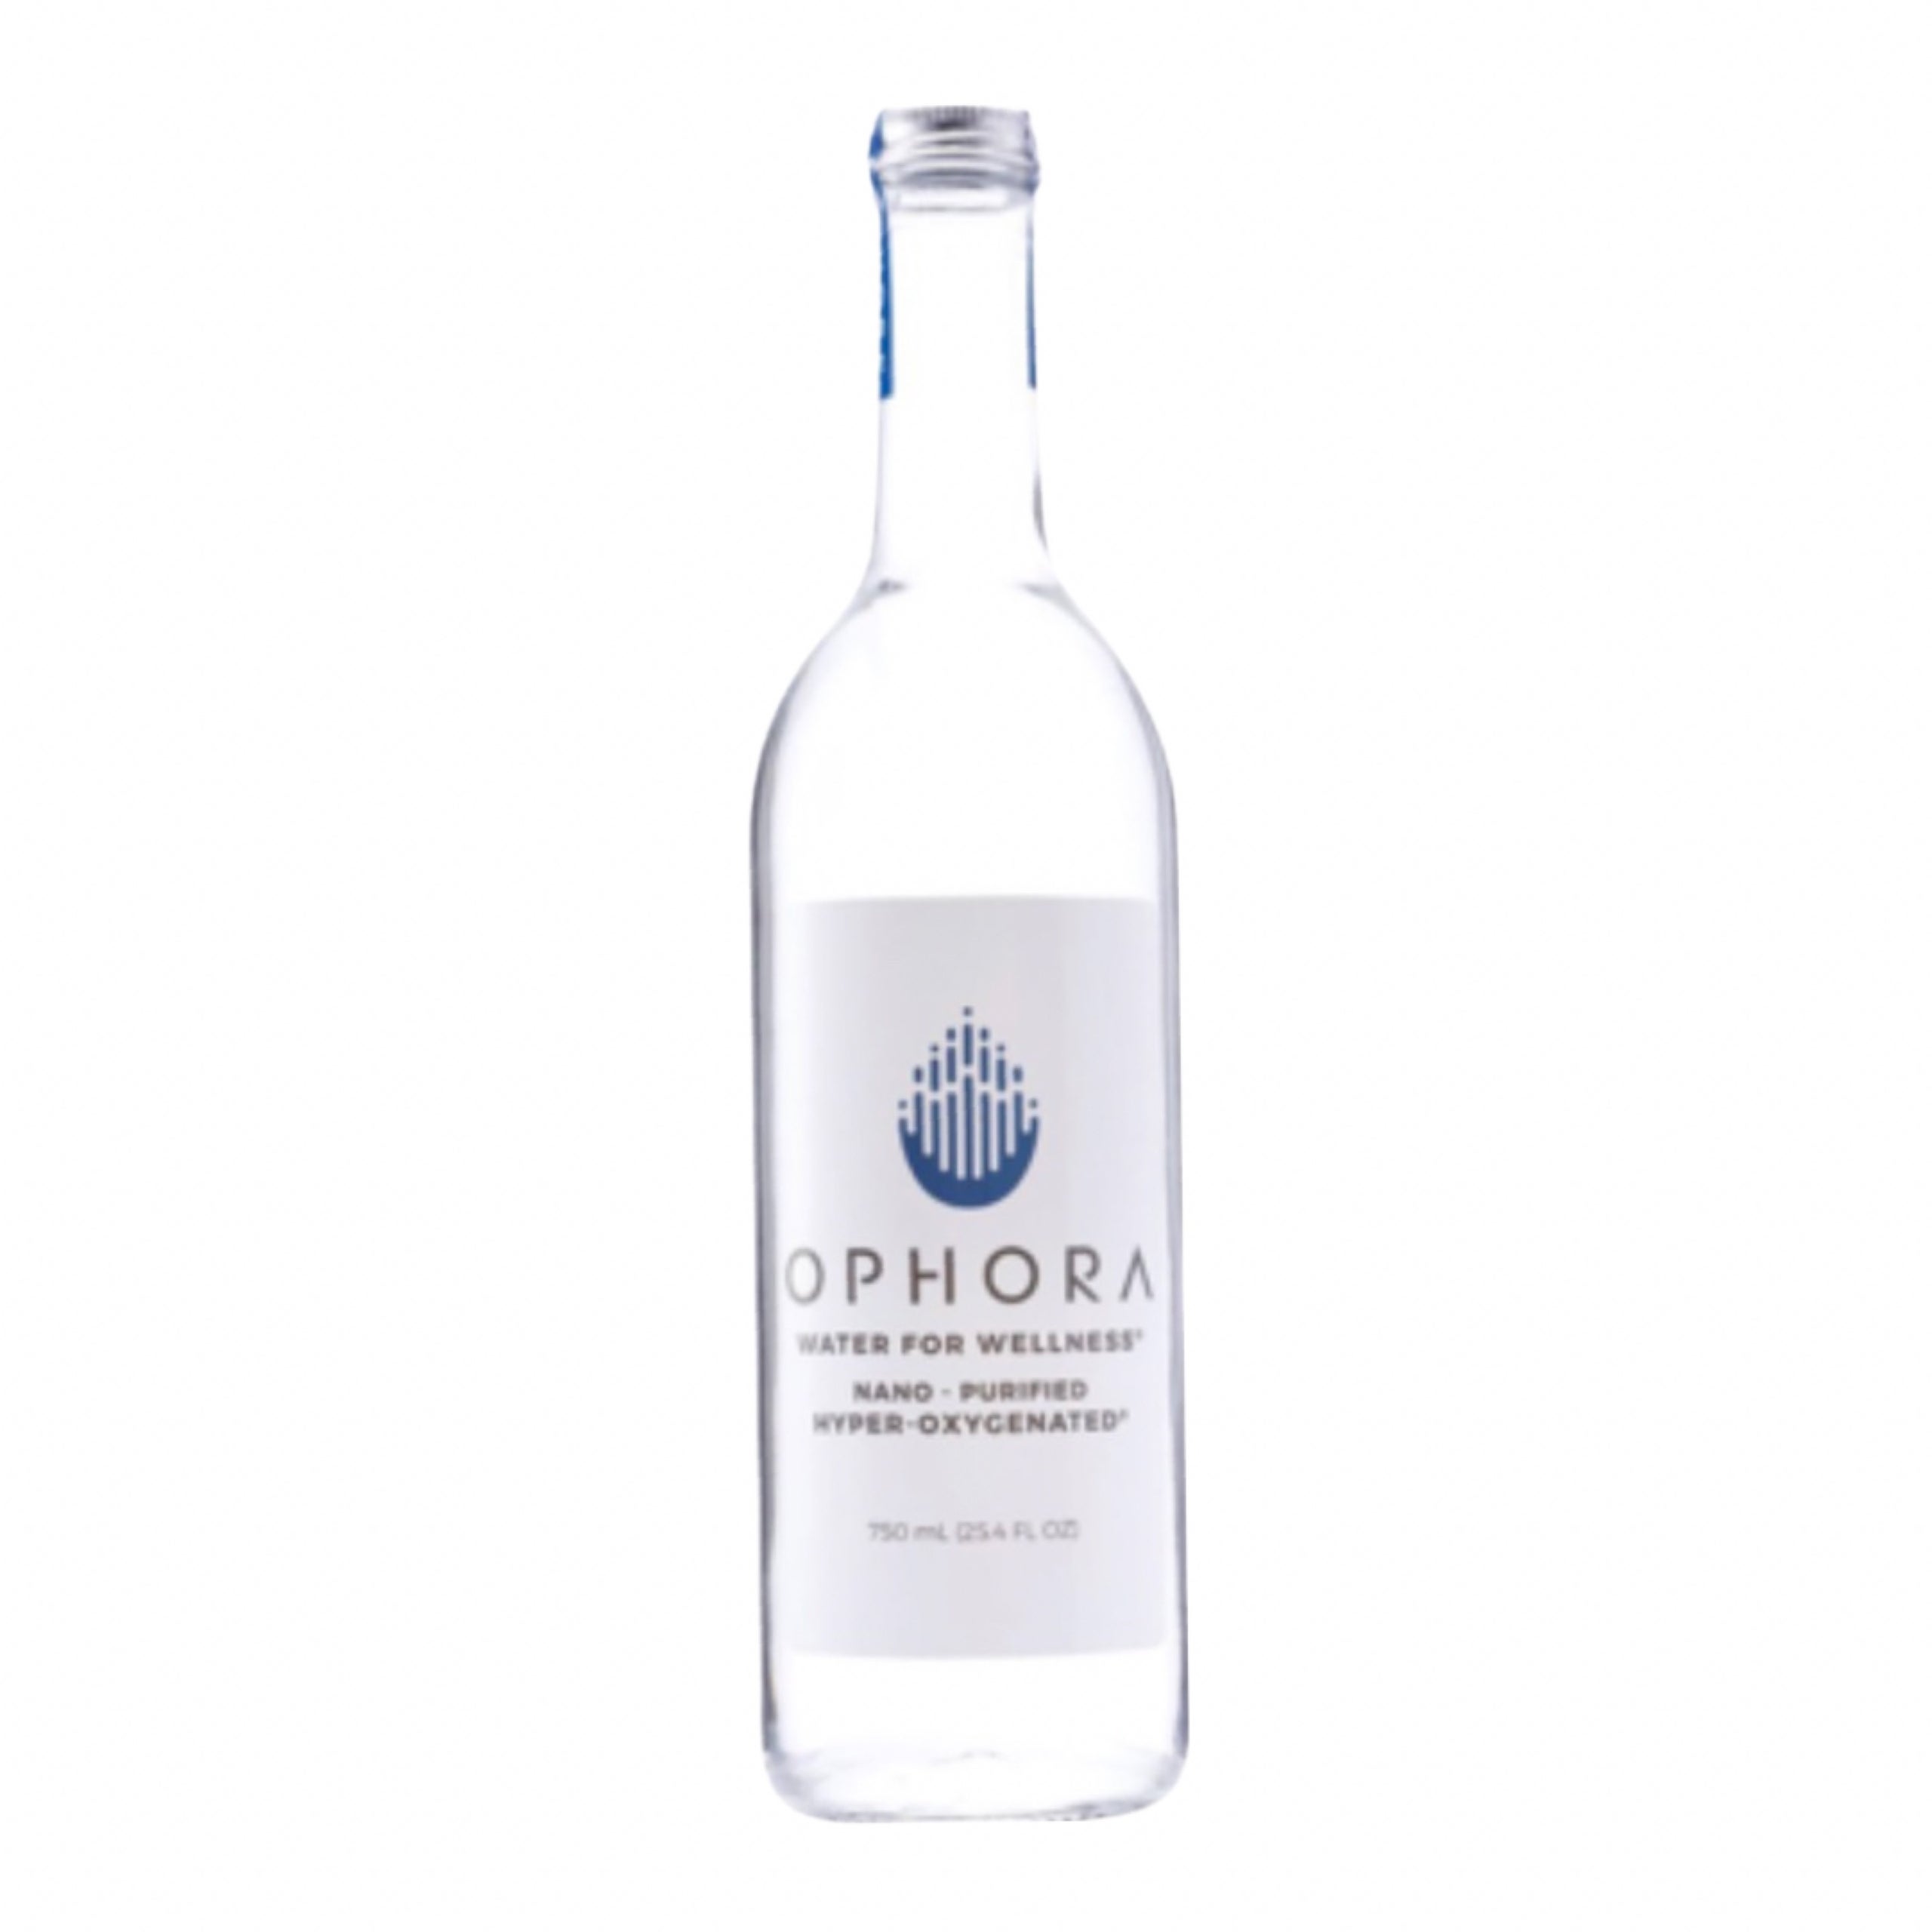 OPHORA / Hyper-Oxygenated Water